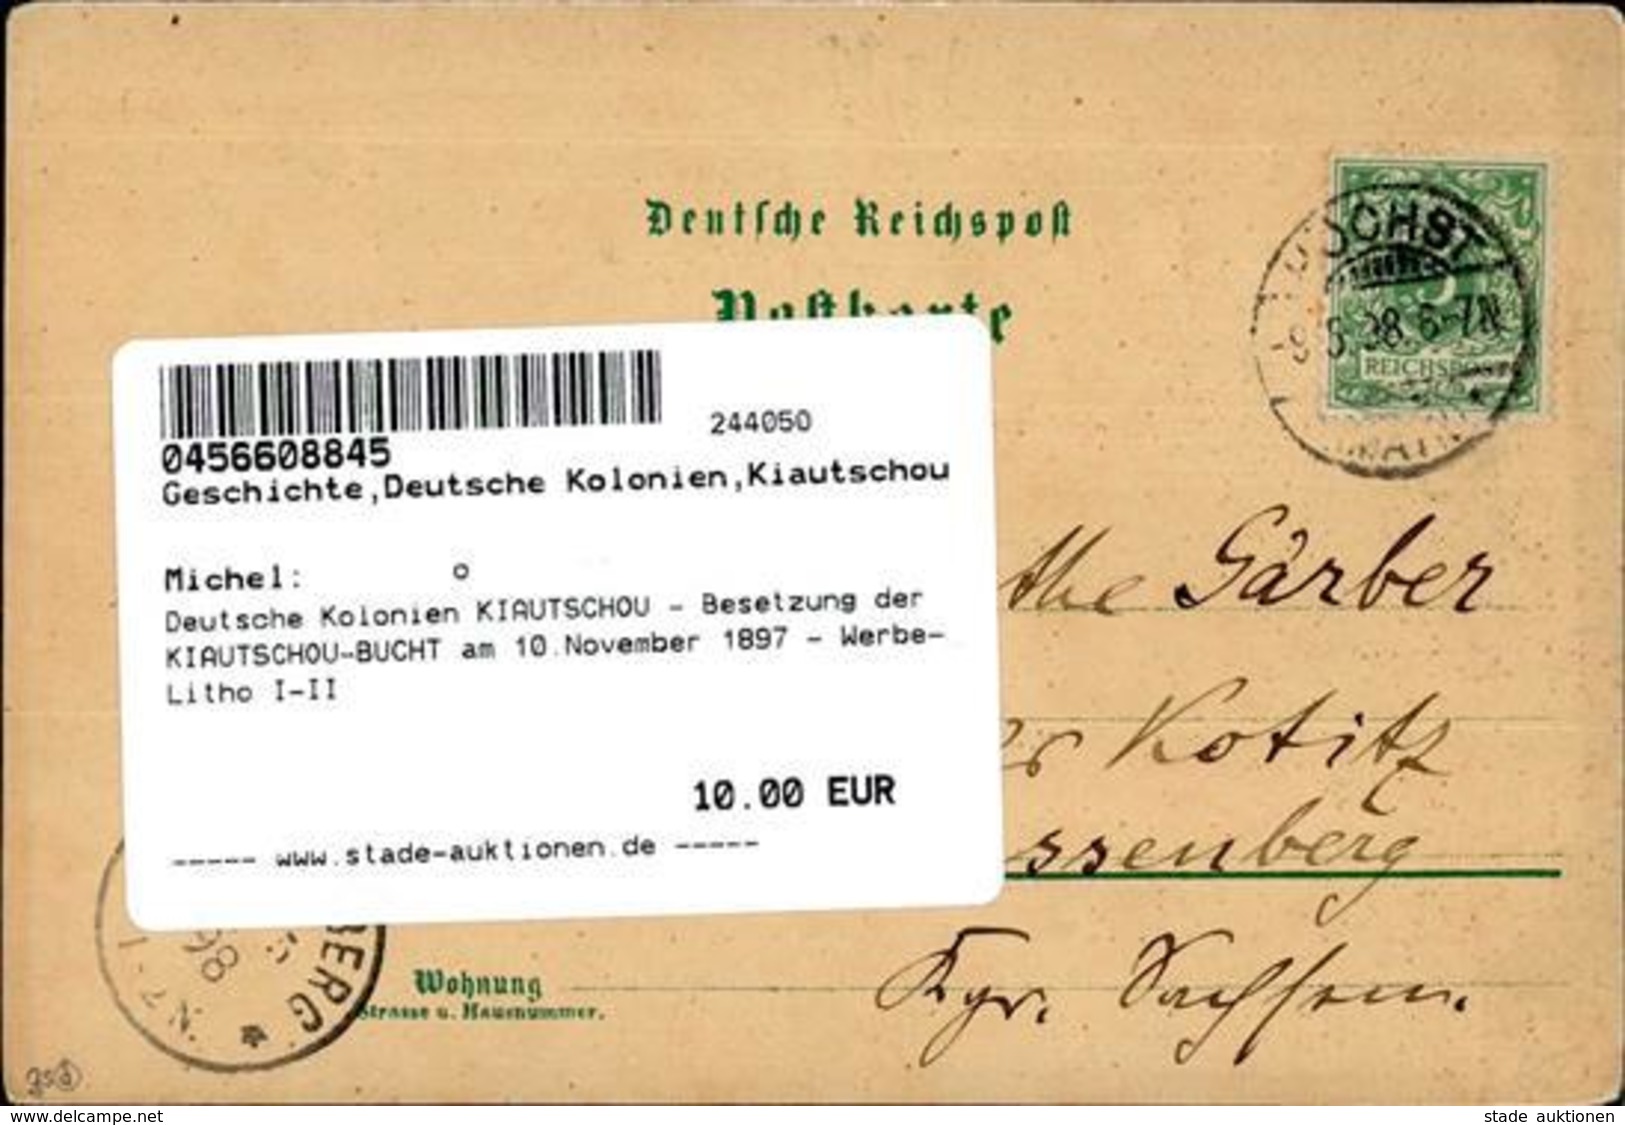 Deutsche Kolonien KIAUTSCHOU - Besetzung Der KIAUTSCHOU-BUCHT Am 10.November 1897 - Werbe-Litho I-II Colonies - Non Classificati